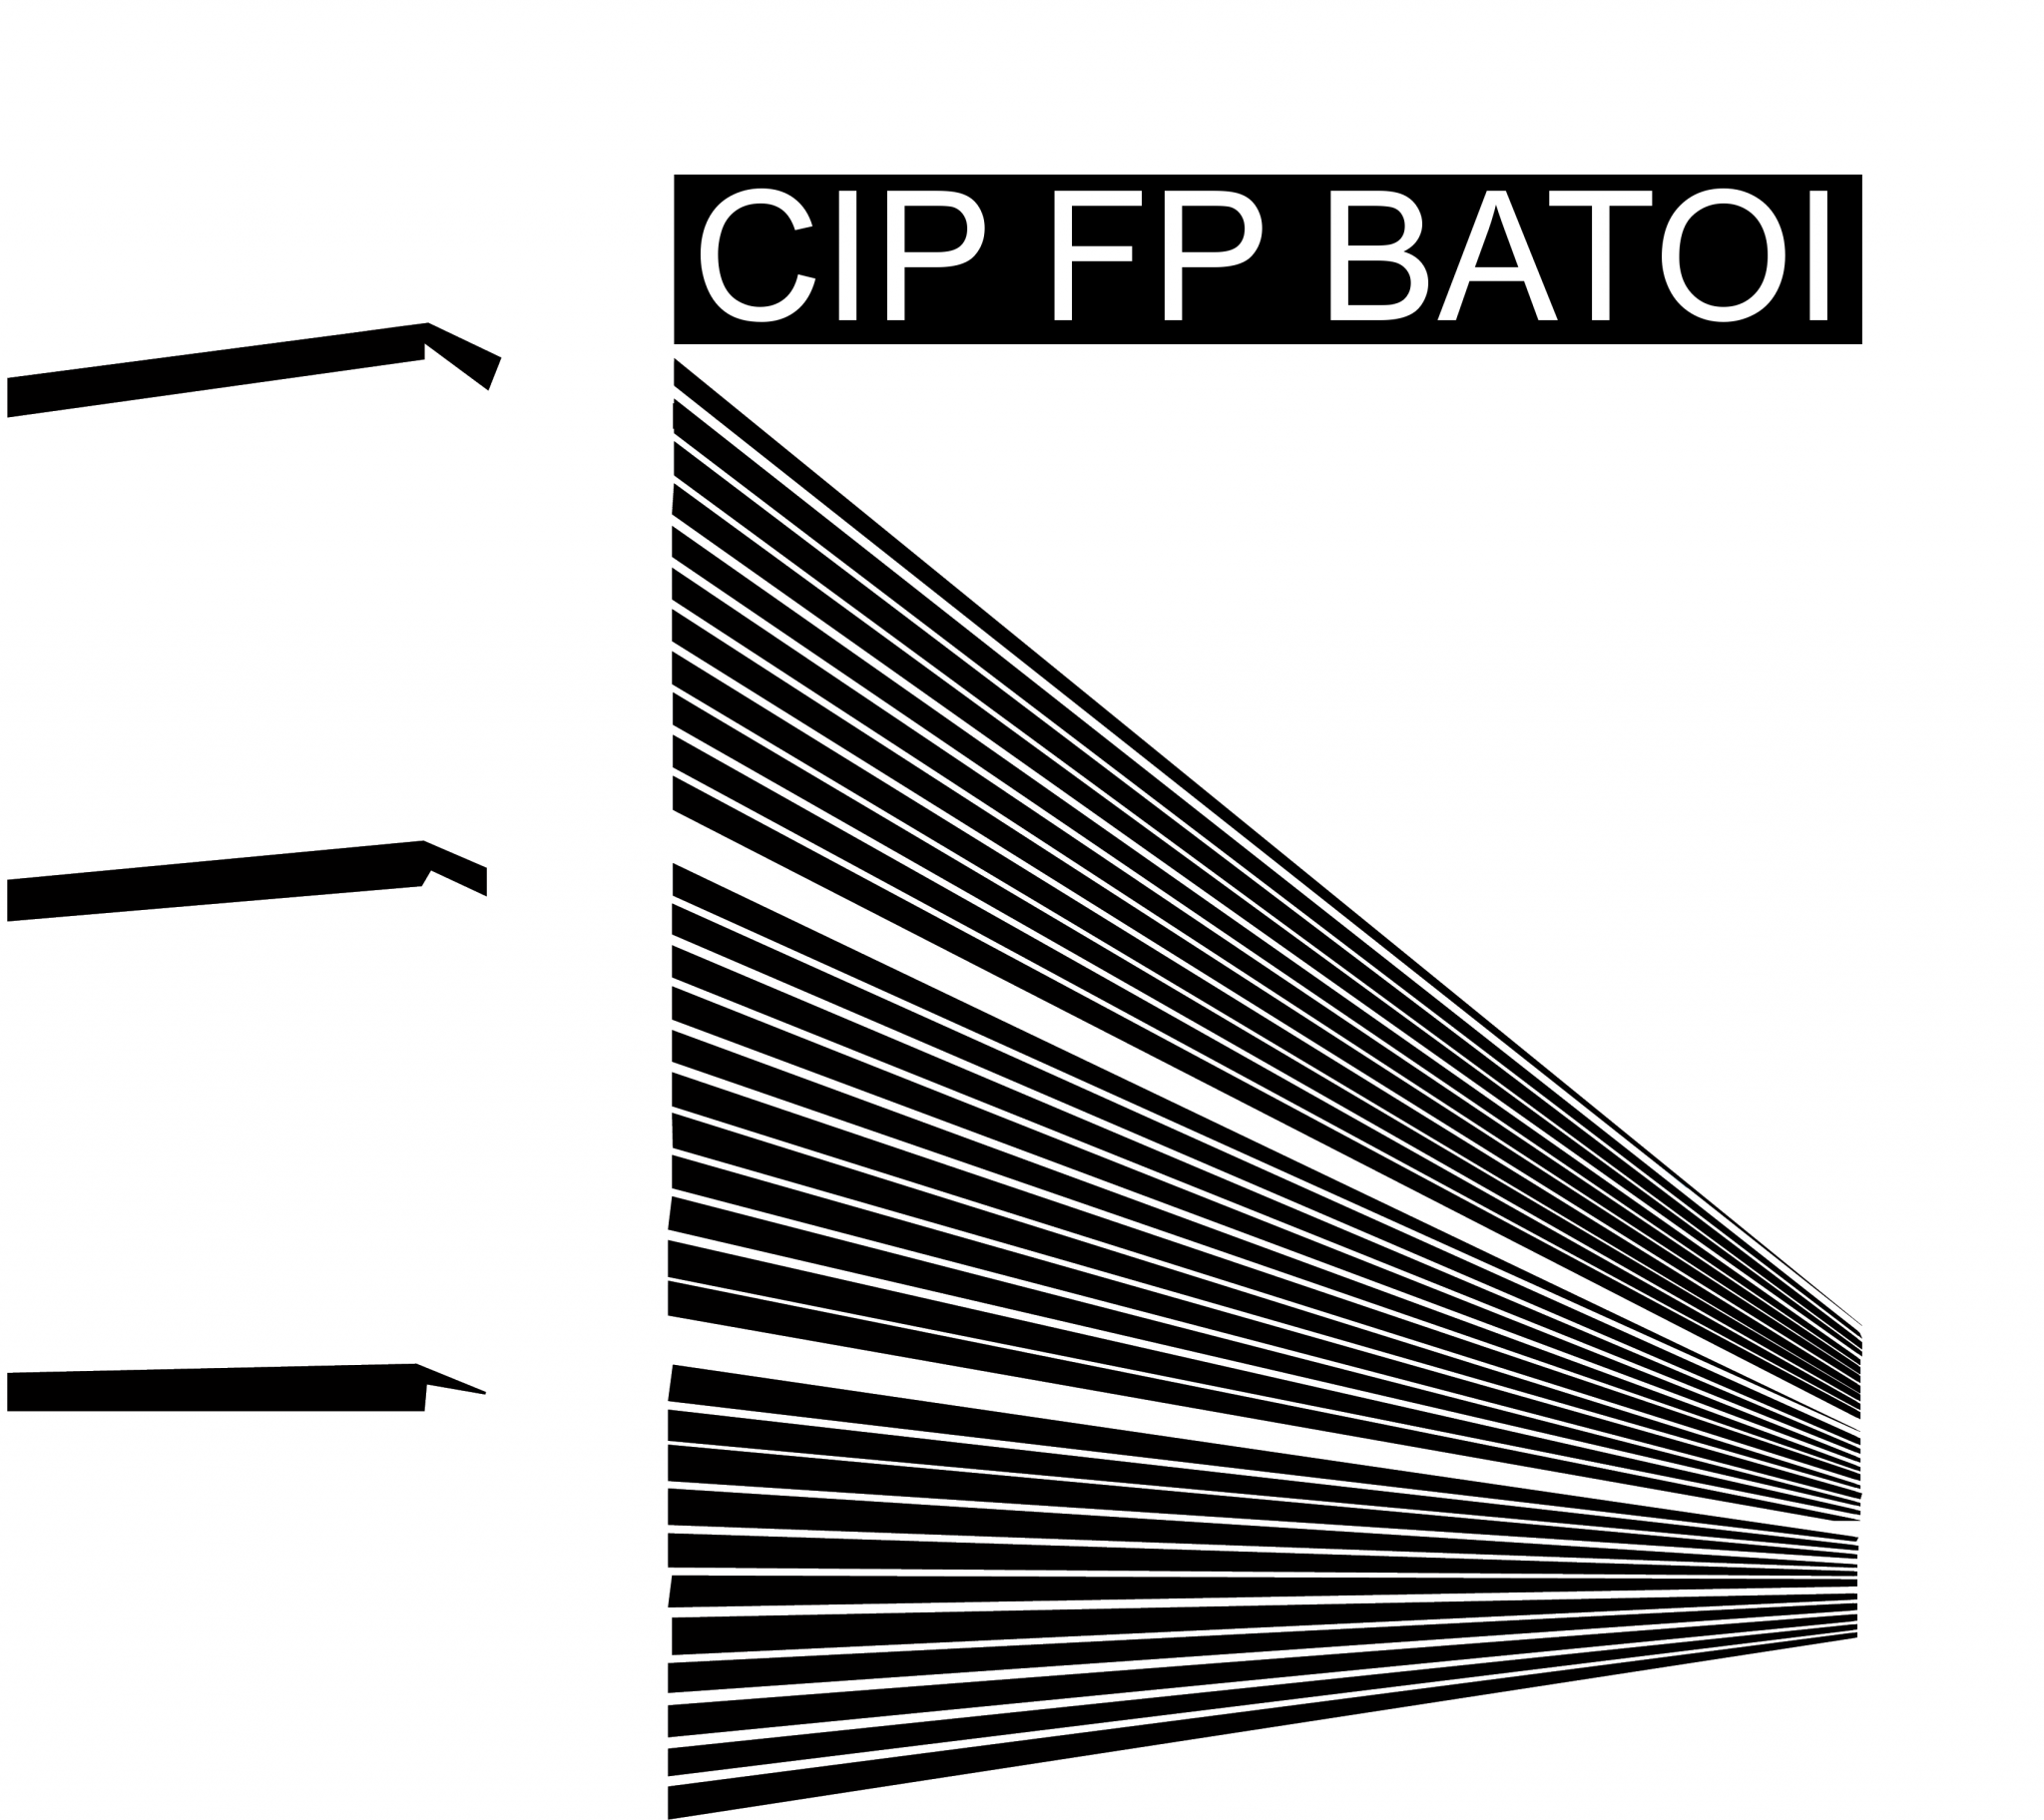   CIPFP Batoi    